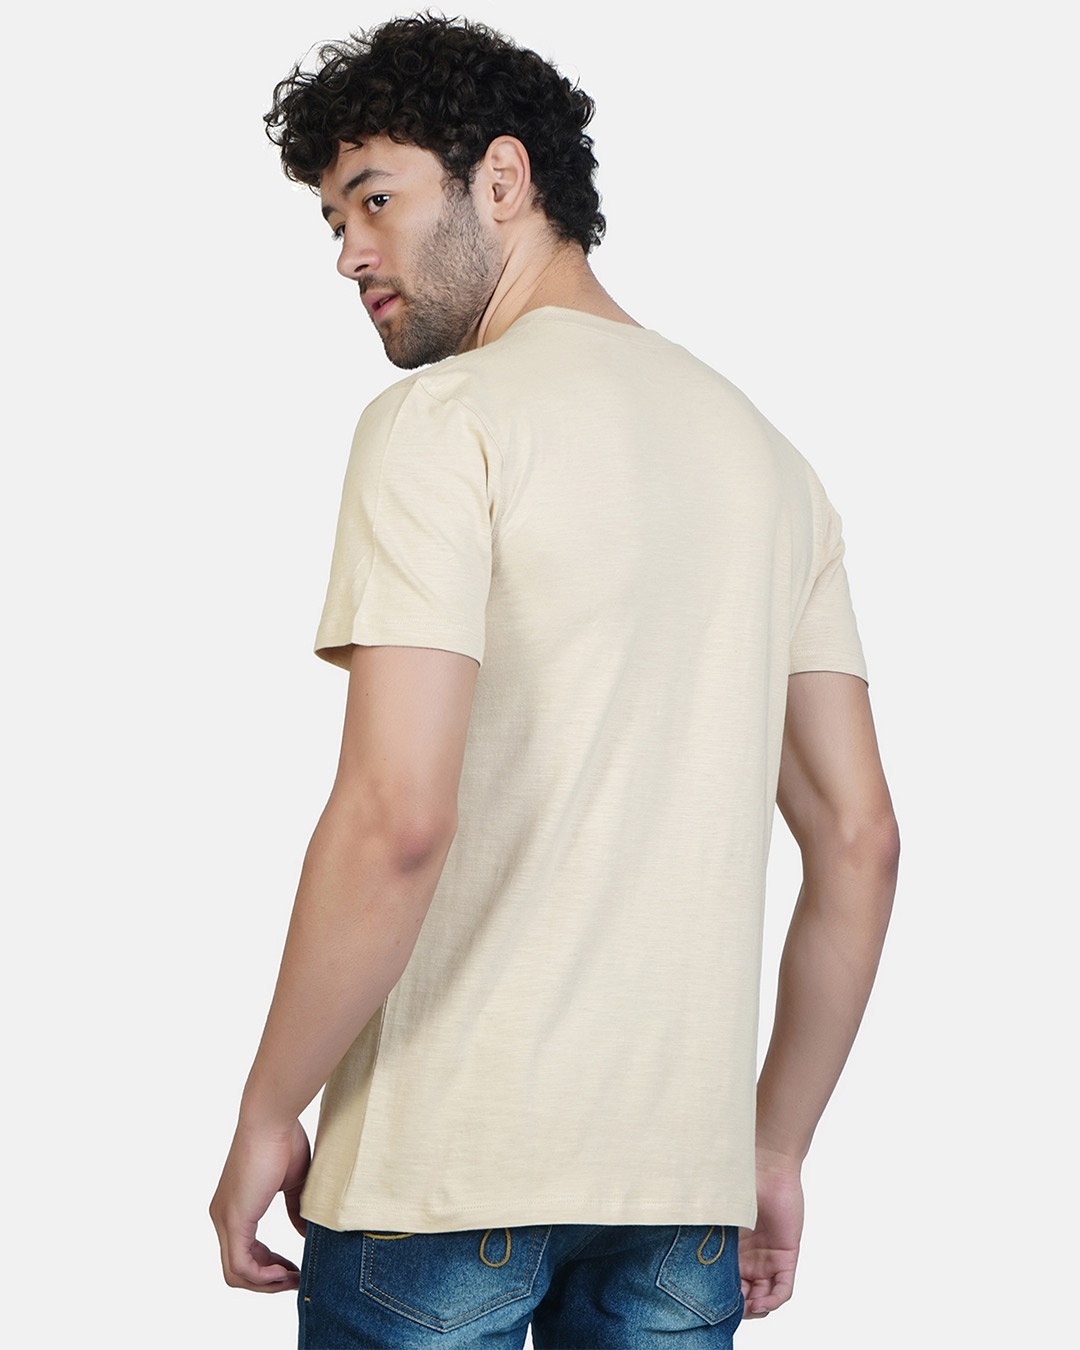 Shop Men's Henley Cotton T-shirt (Pack of 3)-Design